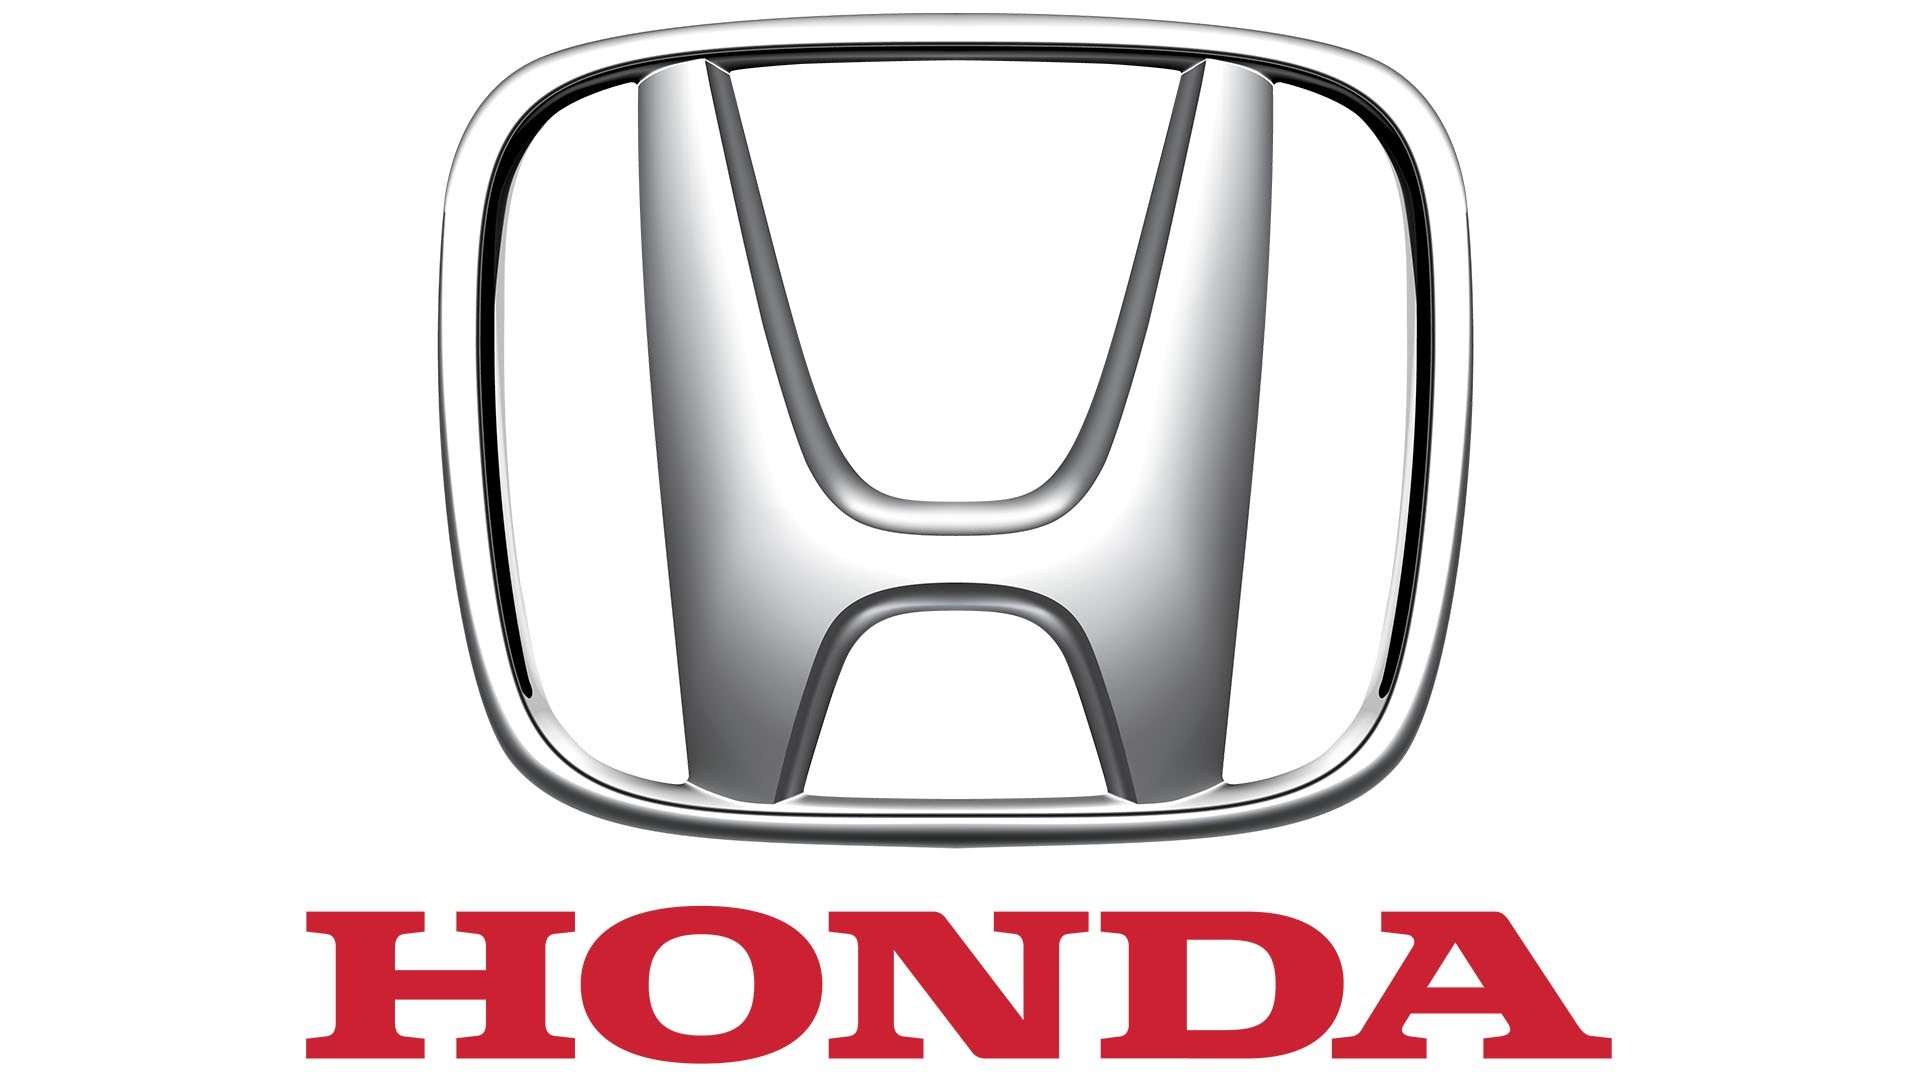 Honda Auto Body and Collision Repair